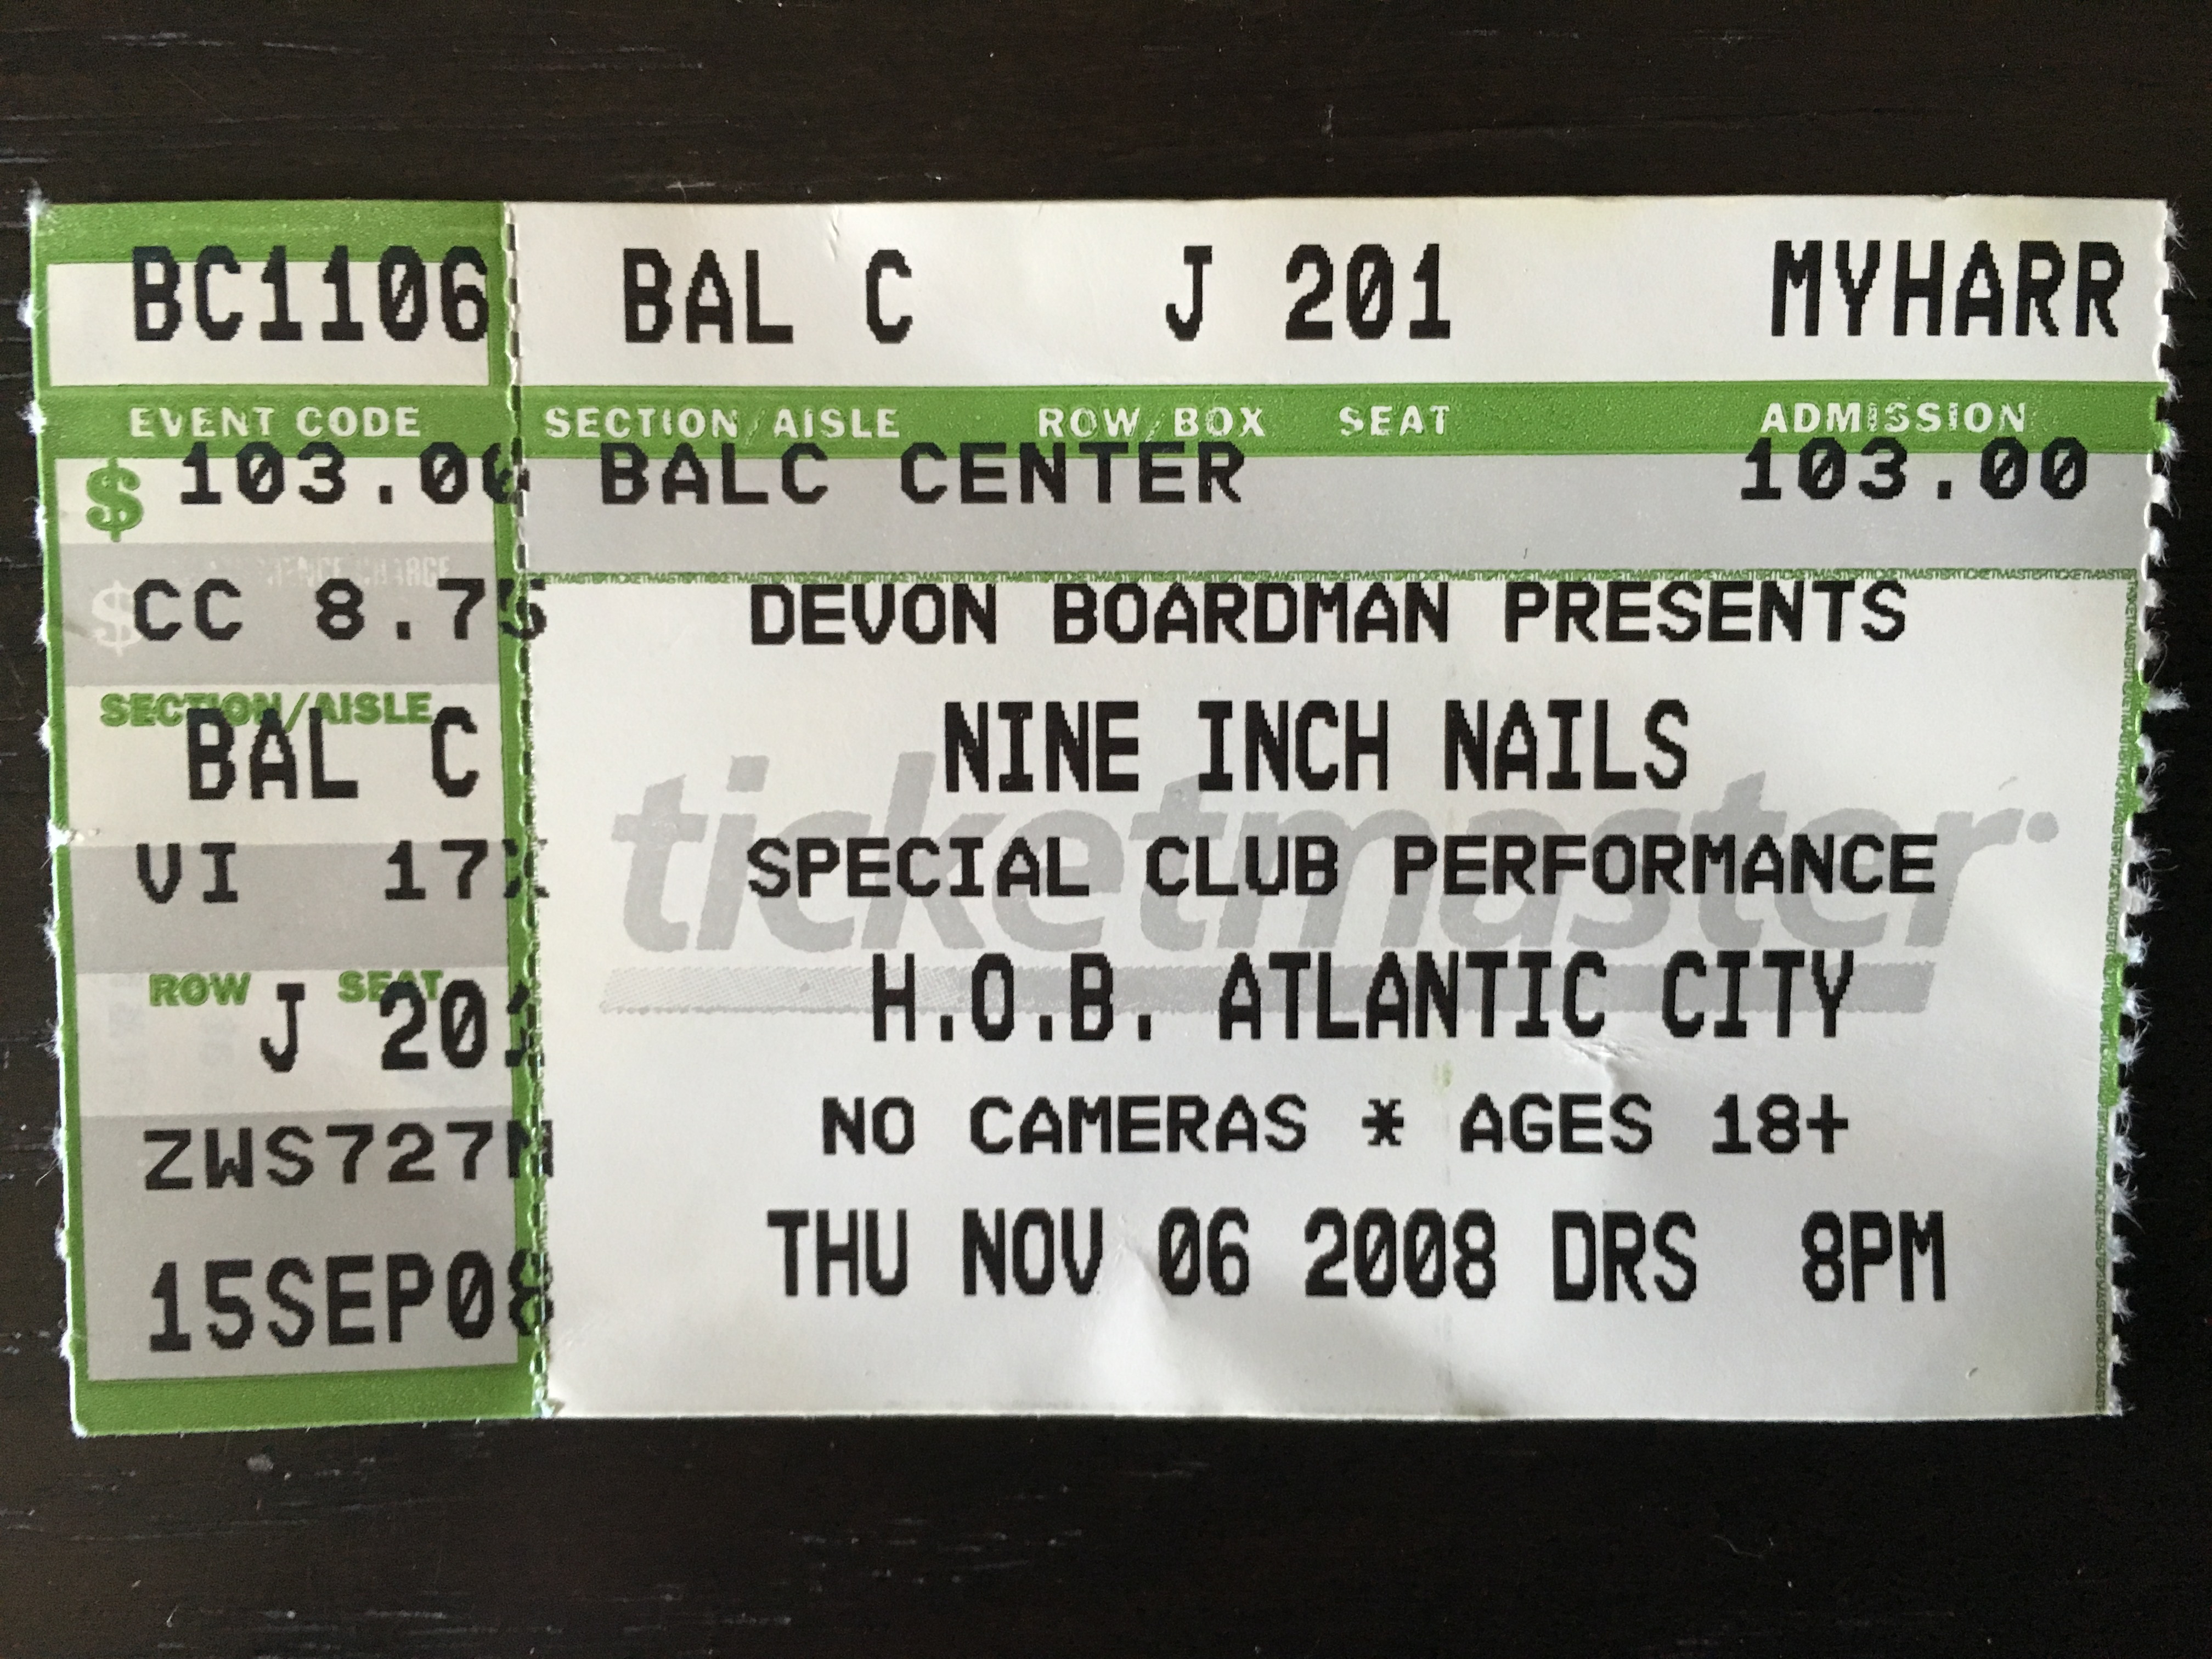 2008/11/06 Ticket